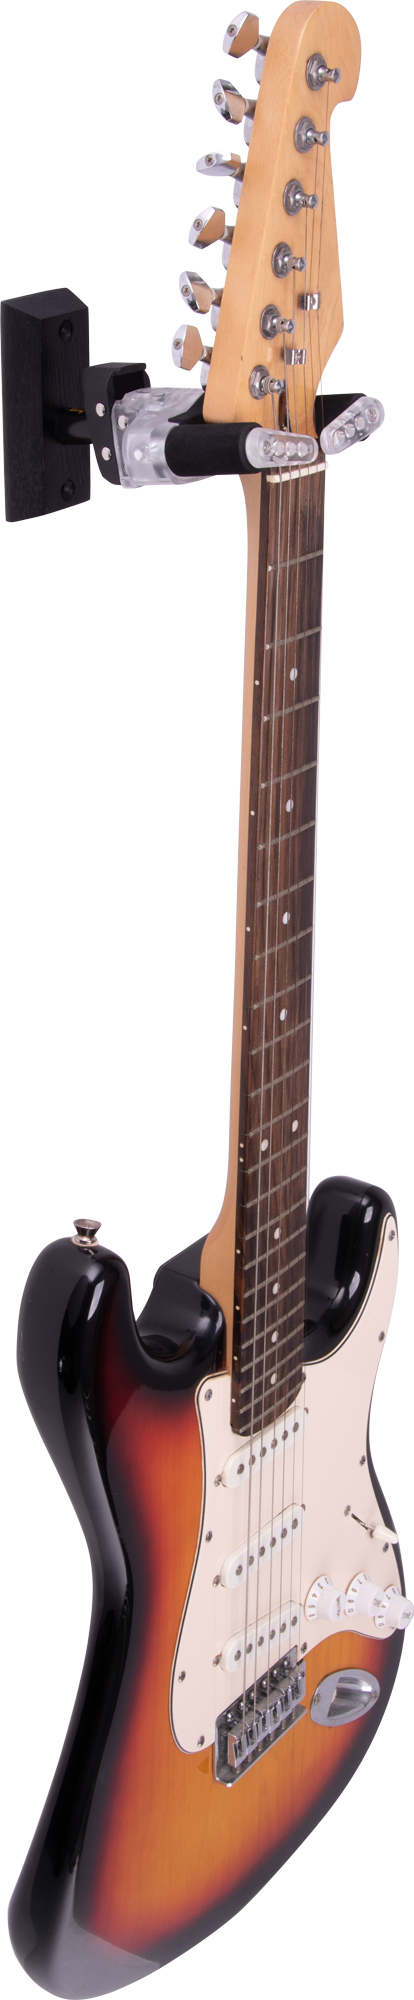 HERCULES HCGSP-38WBLT Gitarrenwandhalter Limited Edition